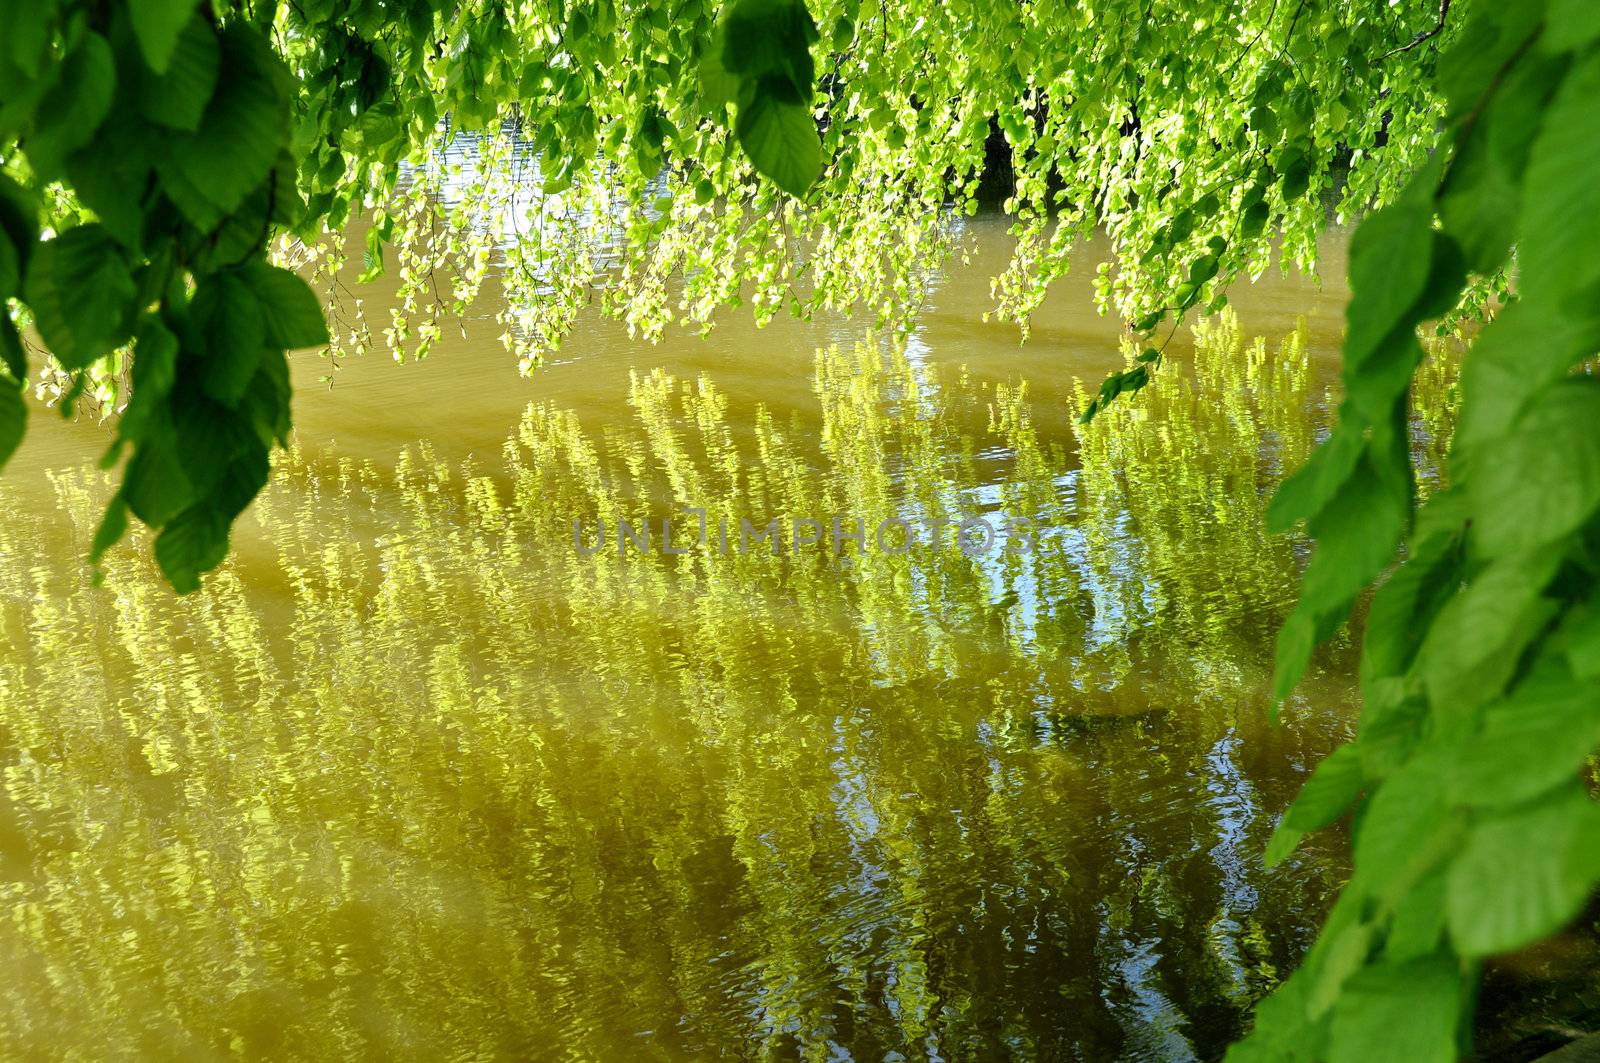 Pond in spring by dutourdumonde